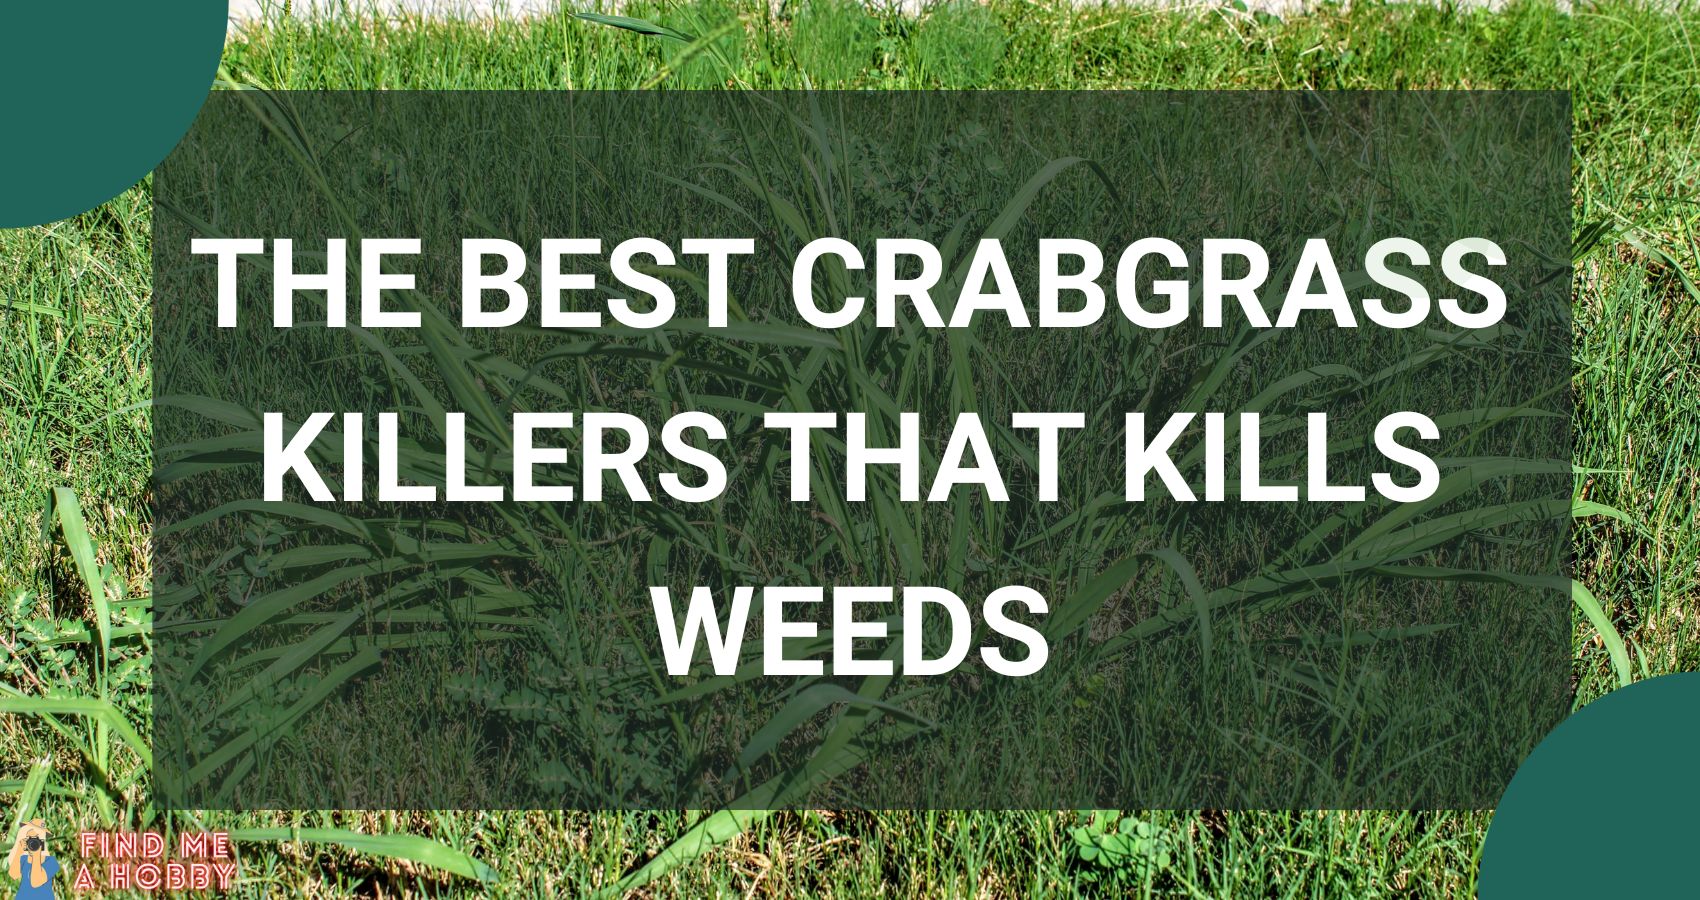 The Best Crabgrass Killers THAT KILLS WEEDS